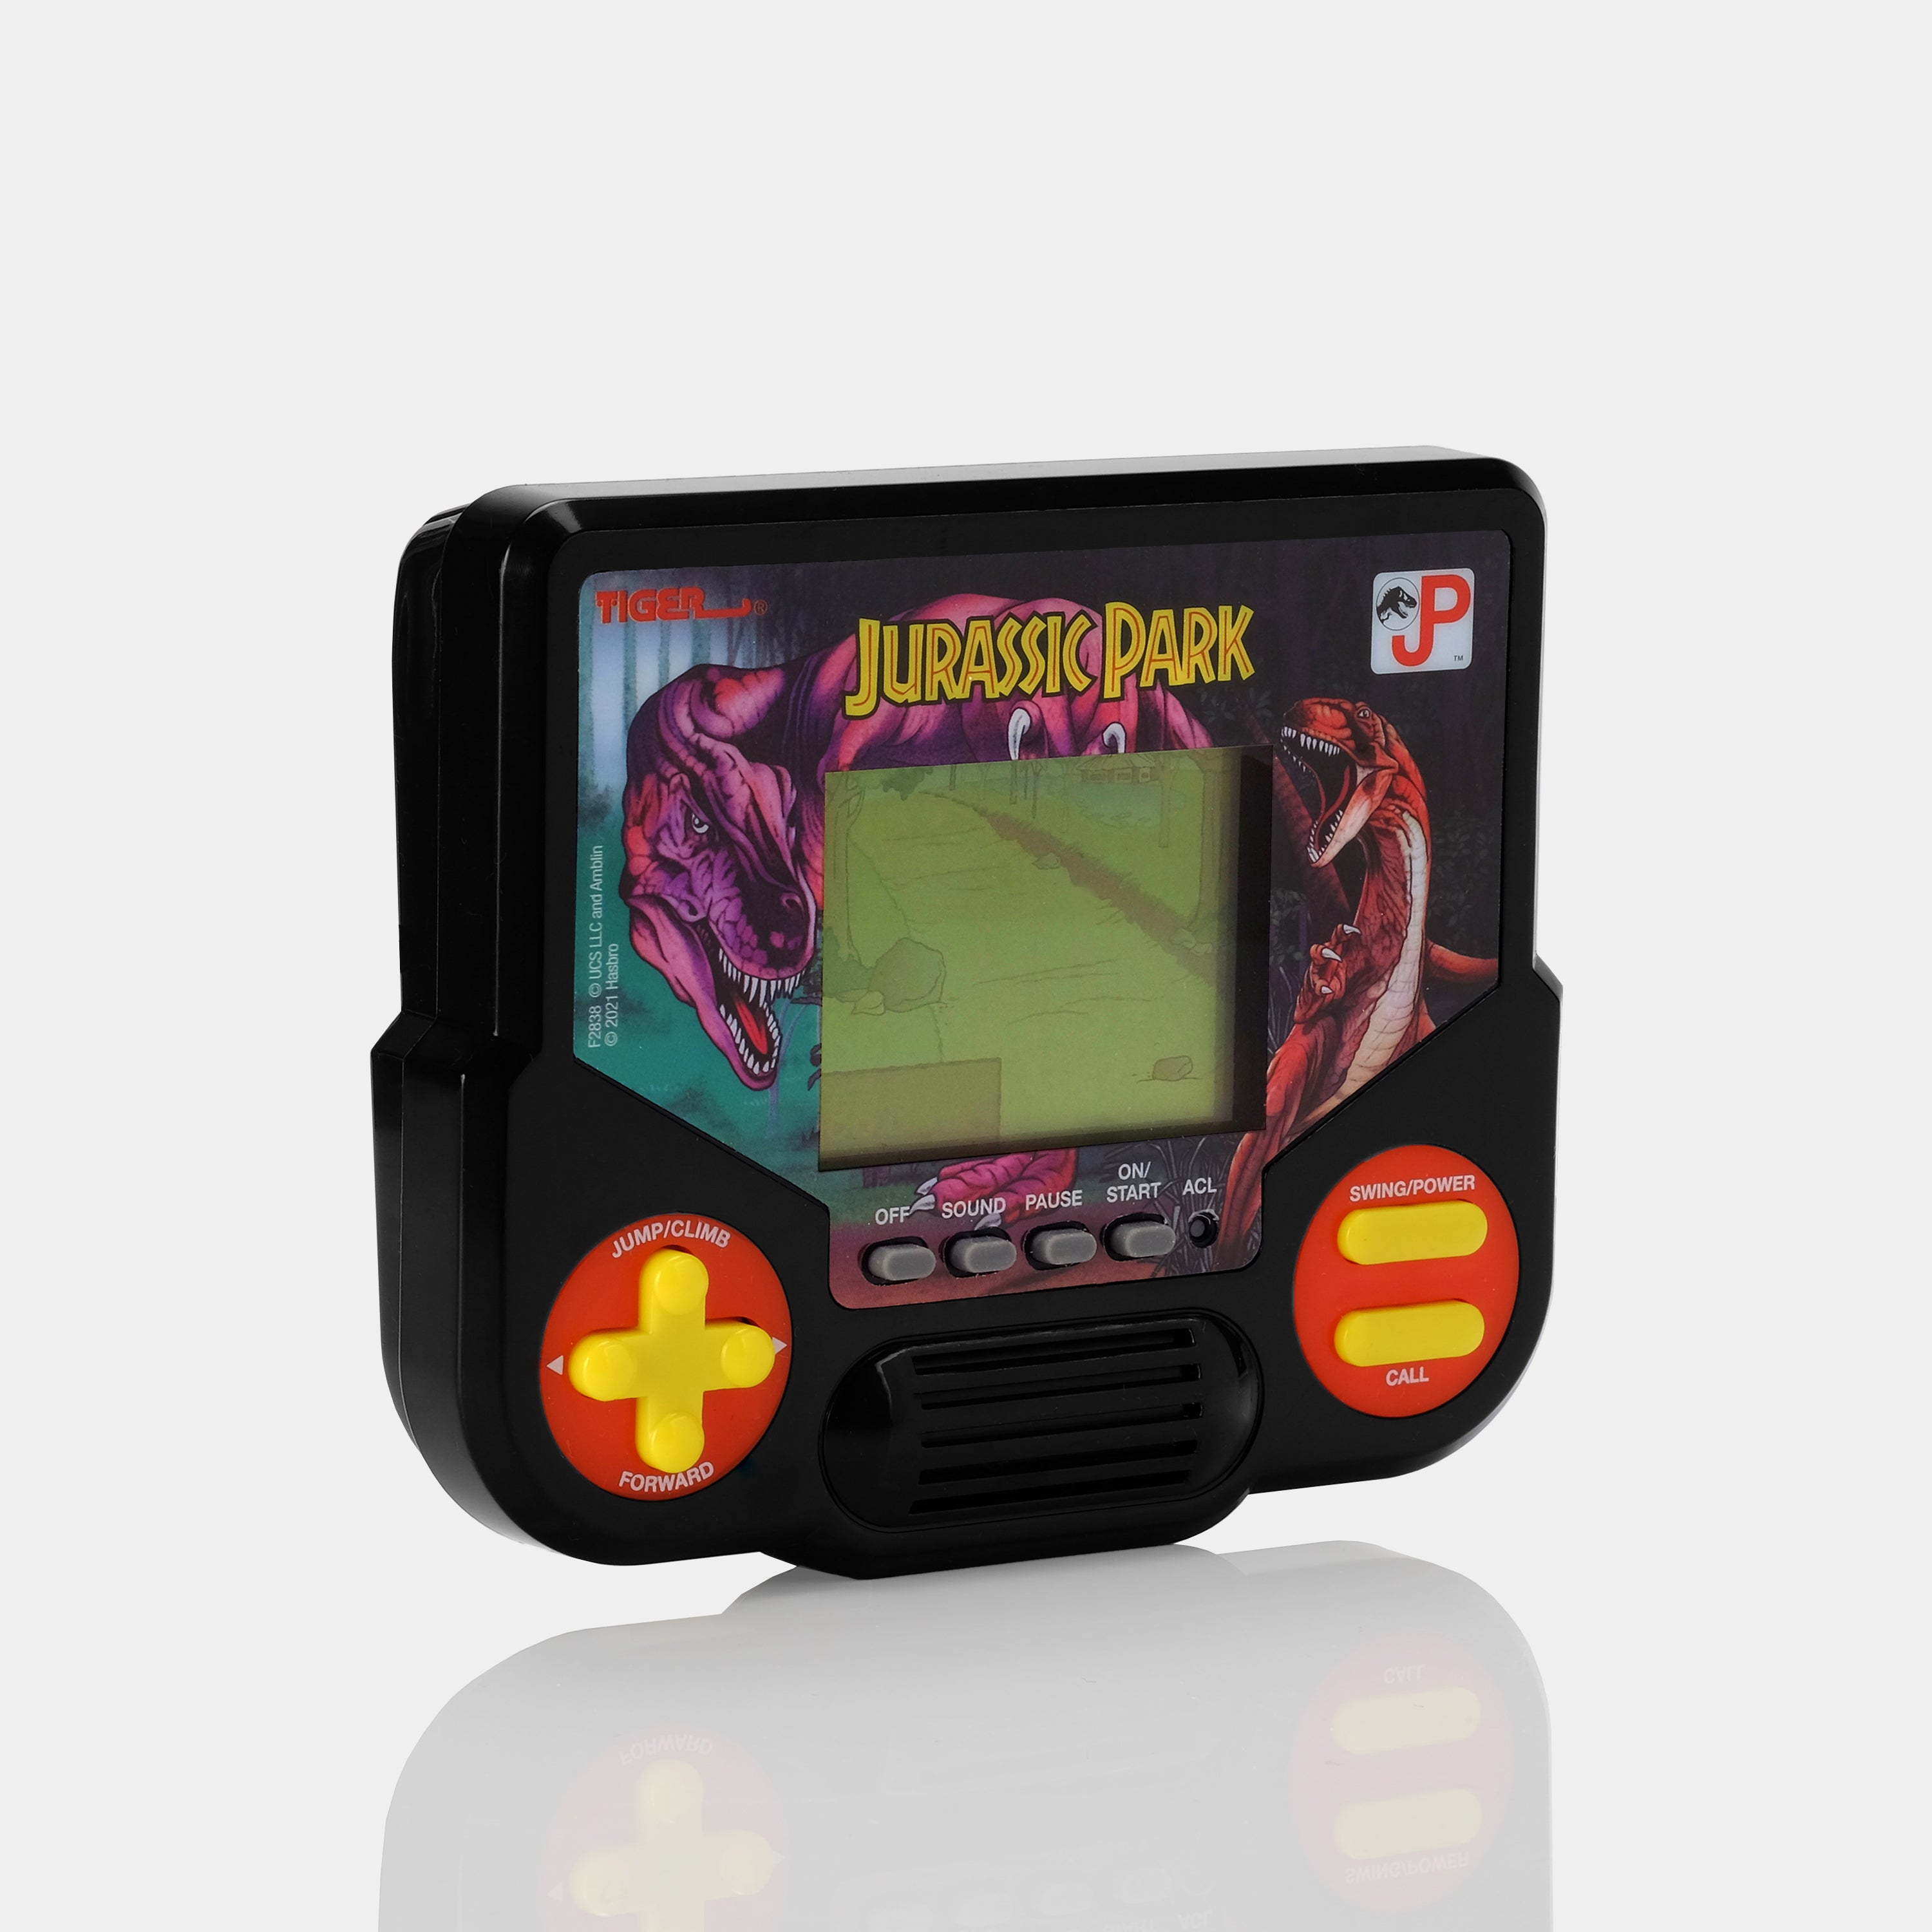 Jurassic Park Handheld Video Game